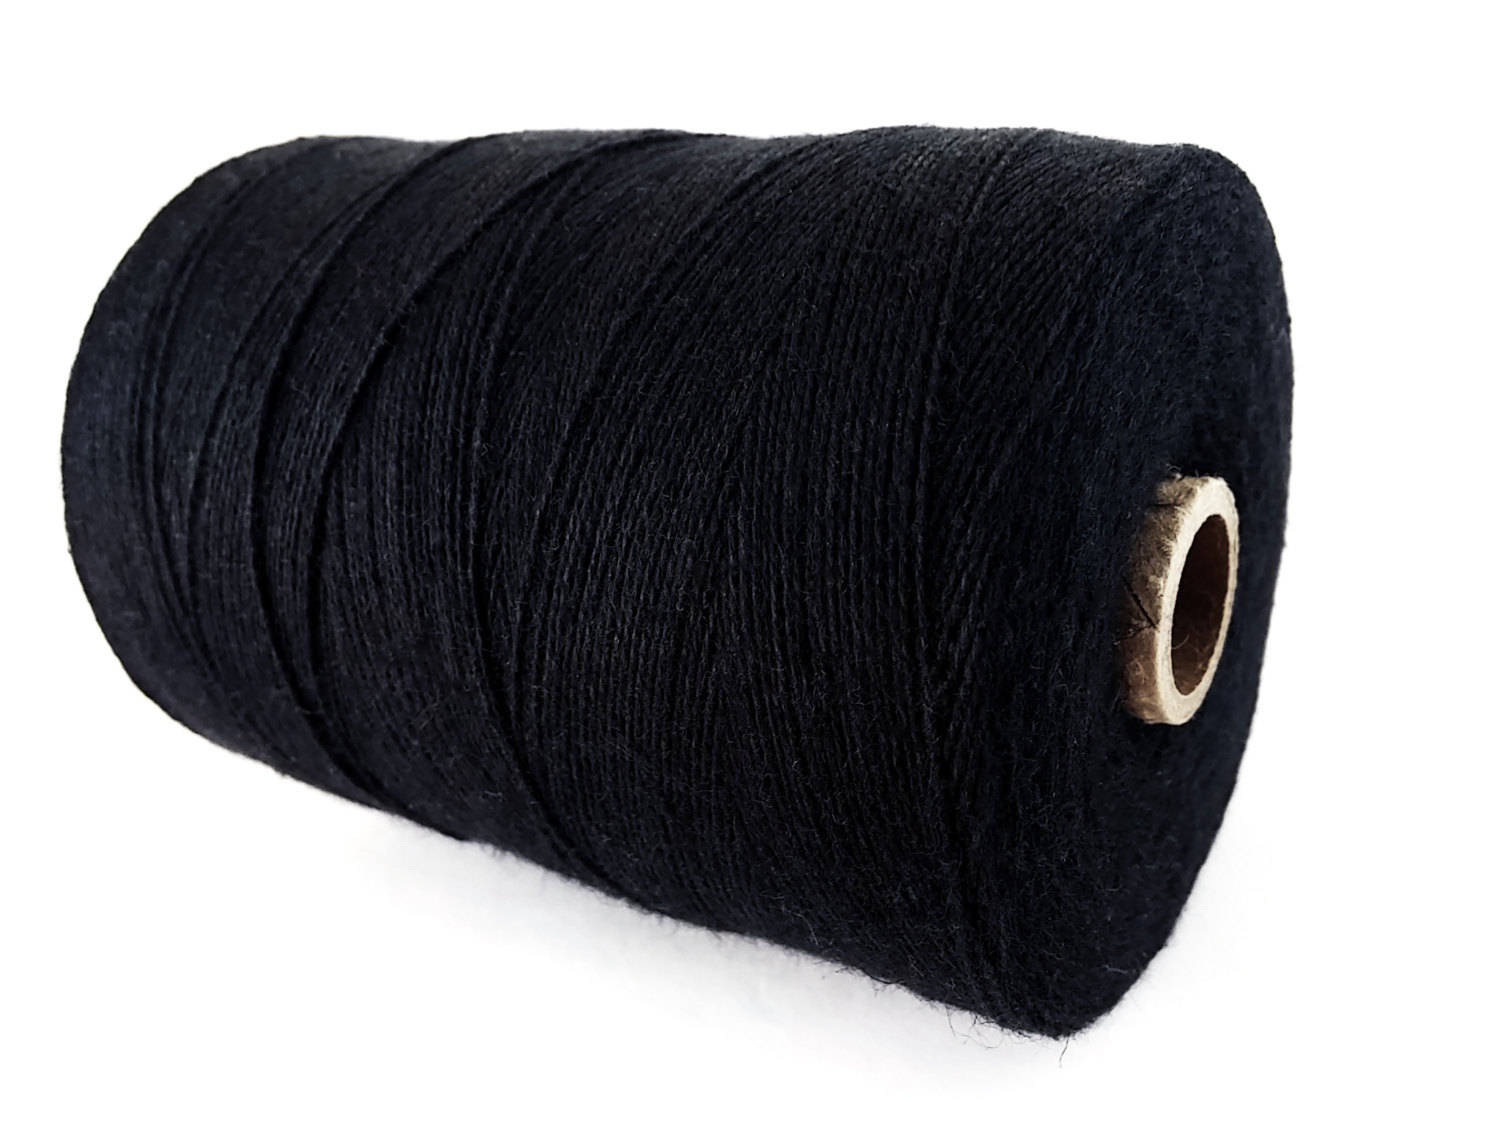 Corde de lin & coton bio naturelle 0.7mm - 10 mètres - Noir, Blanc, Marron